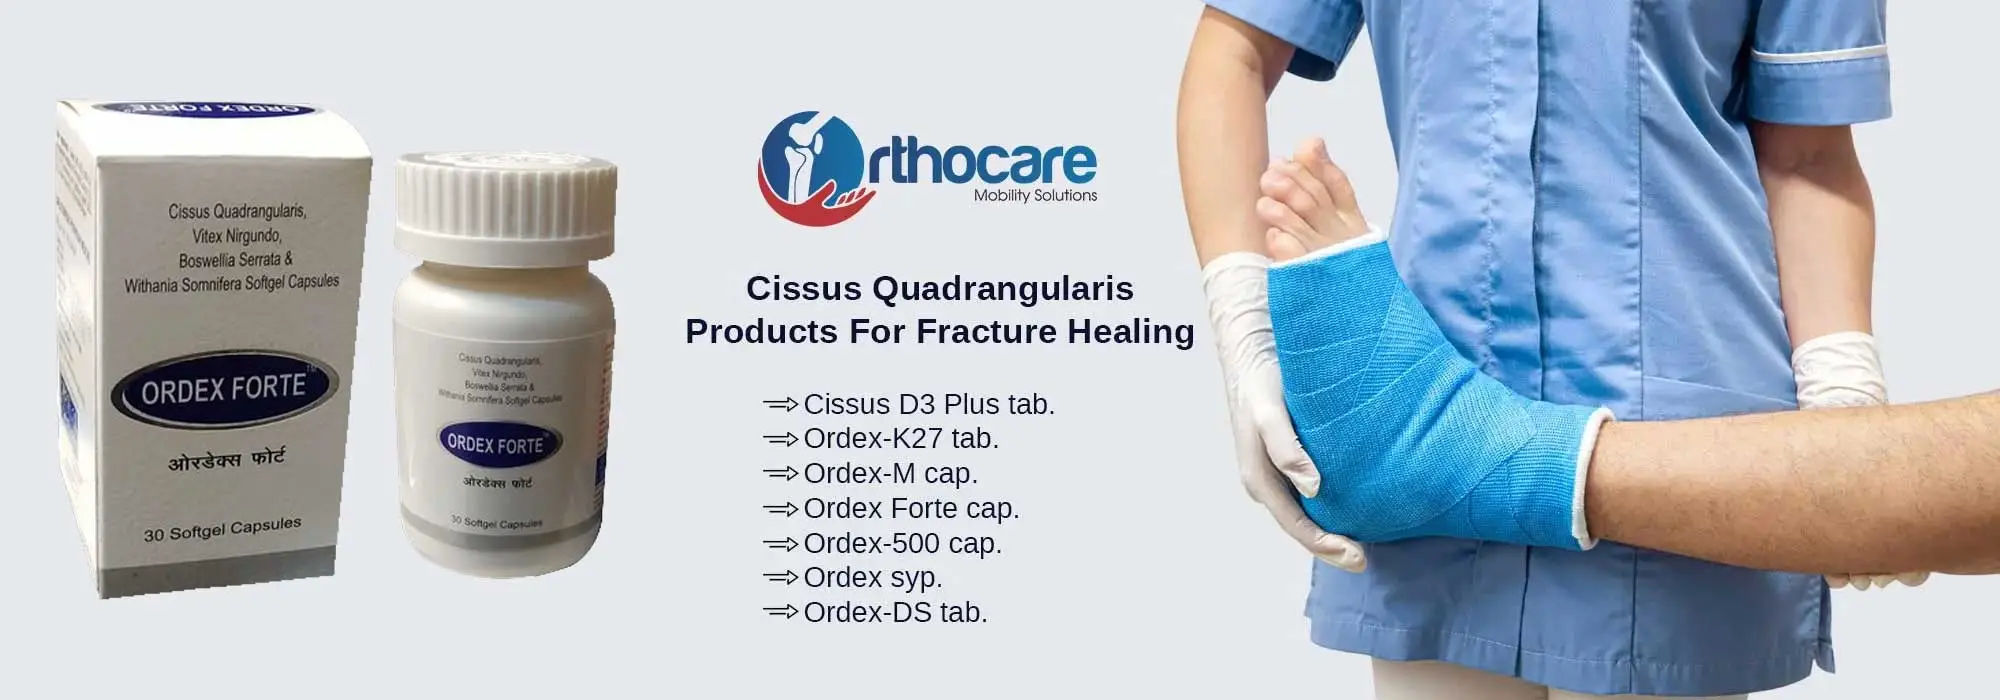 Cissus Quadrangularis Products For Fracture Healing Suppliers in Manipur